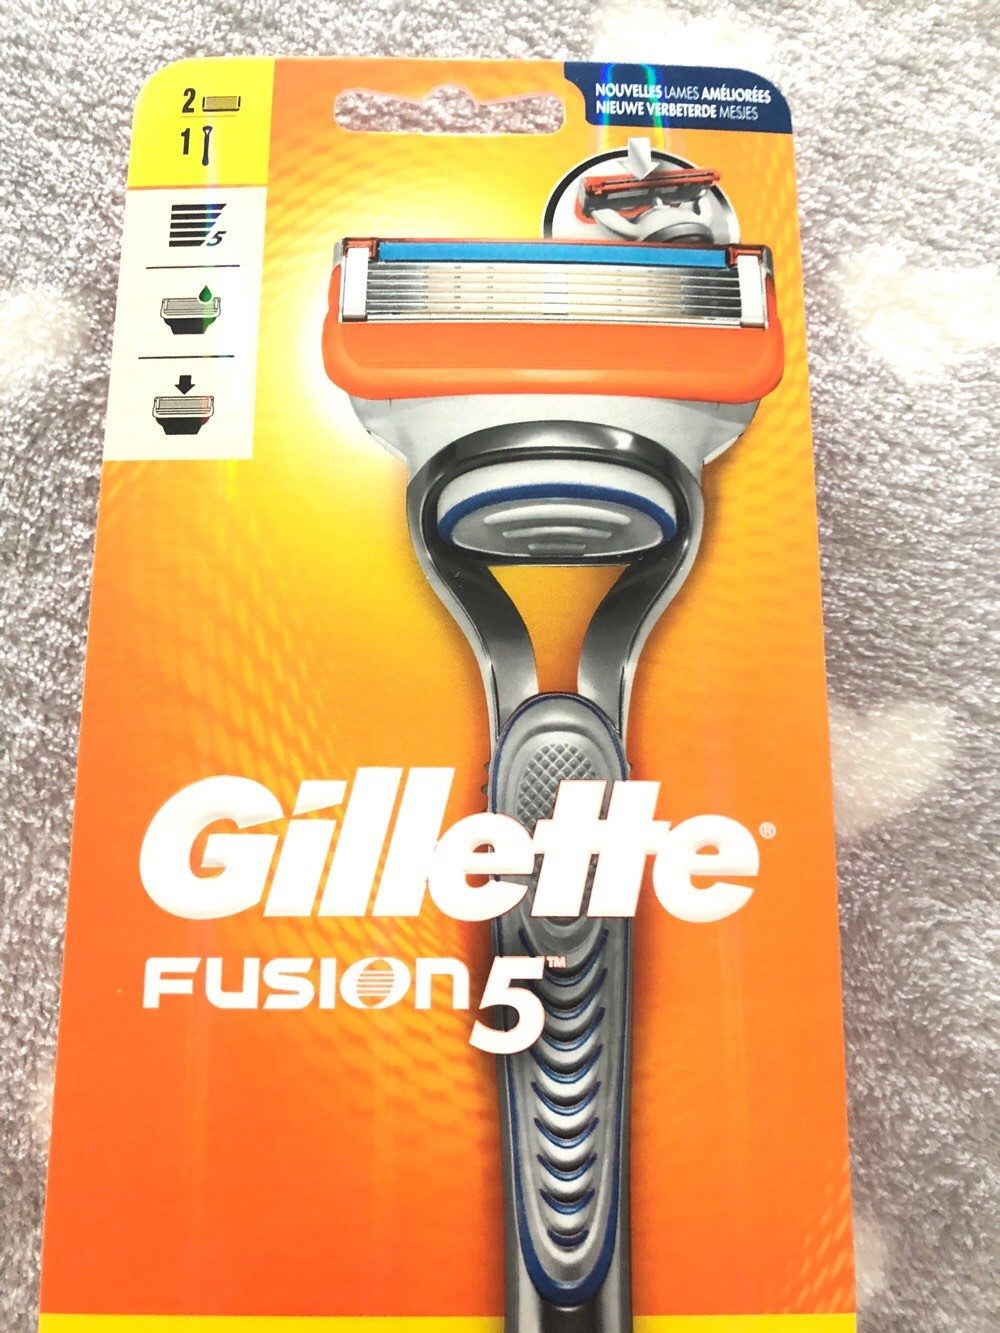 Gillette fusion 5 rasoir - Product - fr